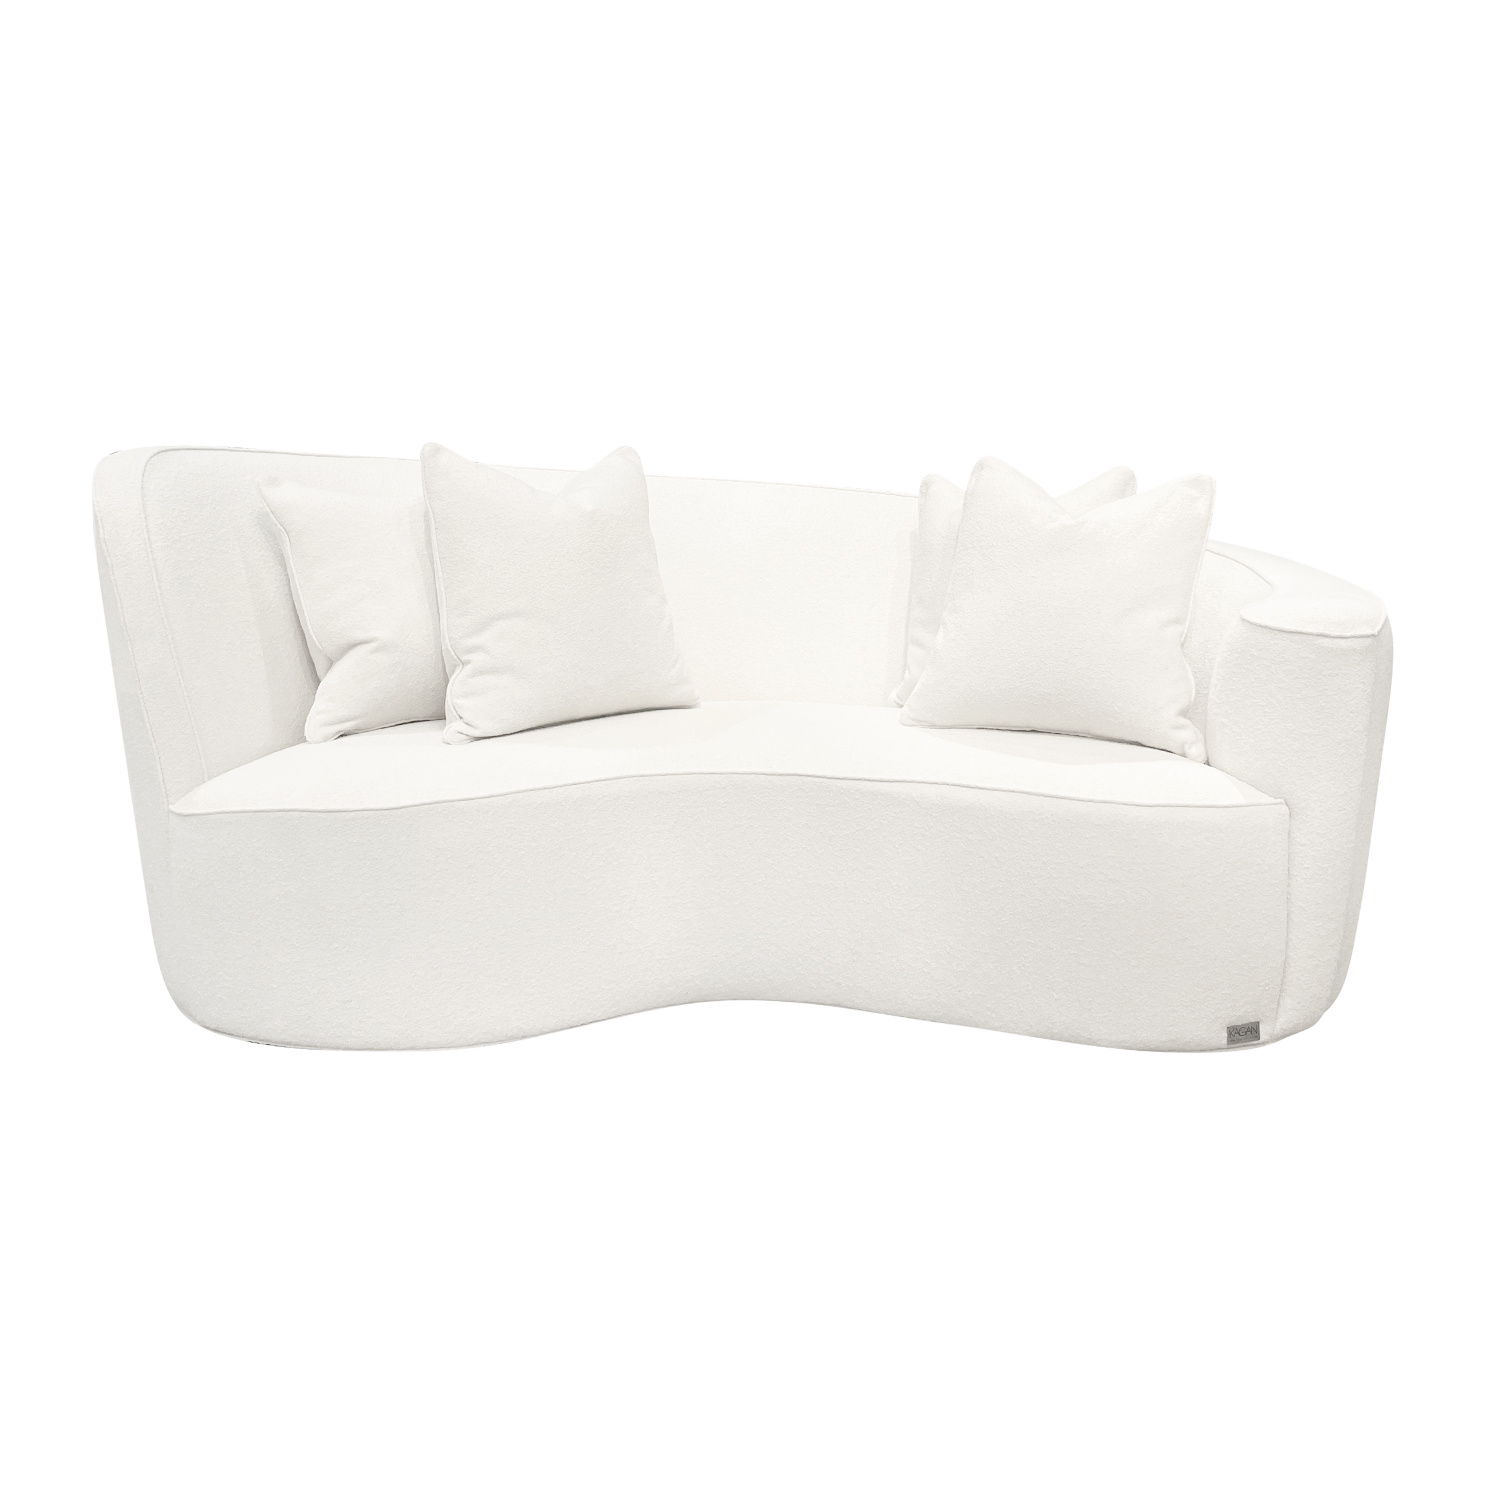 20th Century White American Four Seater Sofa – Vintage Settee by Vladimir Kagan